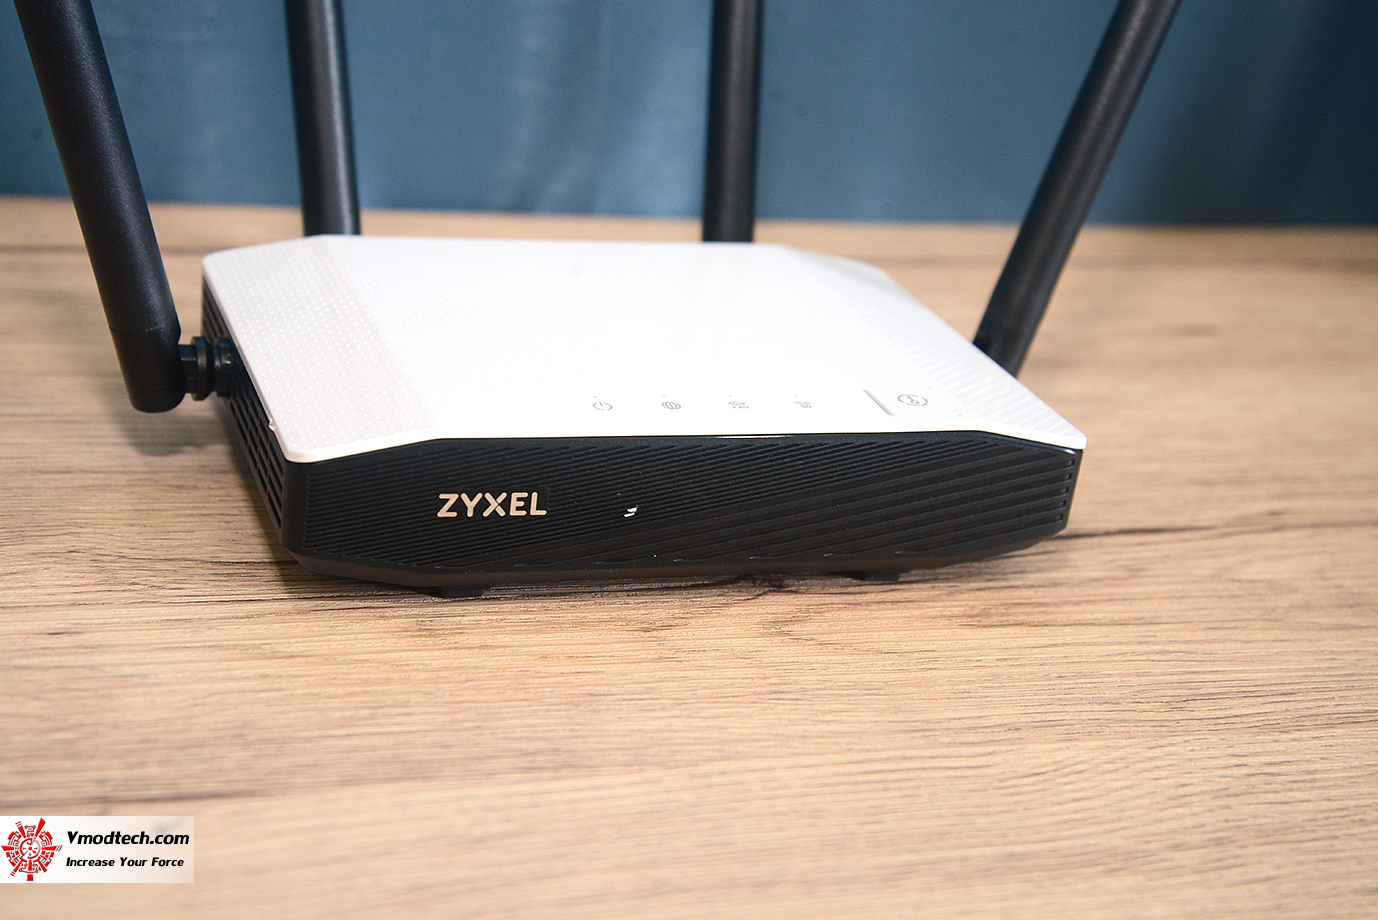 dsc 2487 ZYXEL AC1200 MU MIMO Dual Band Wireless Gigabit Router (NBG6615) Review